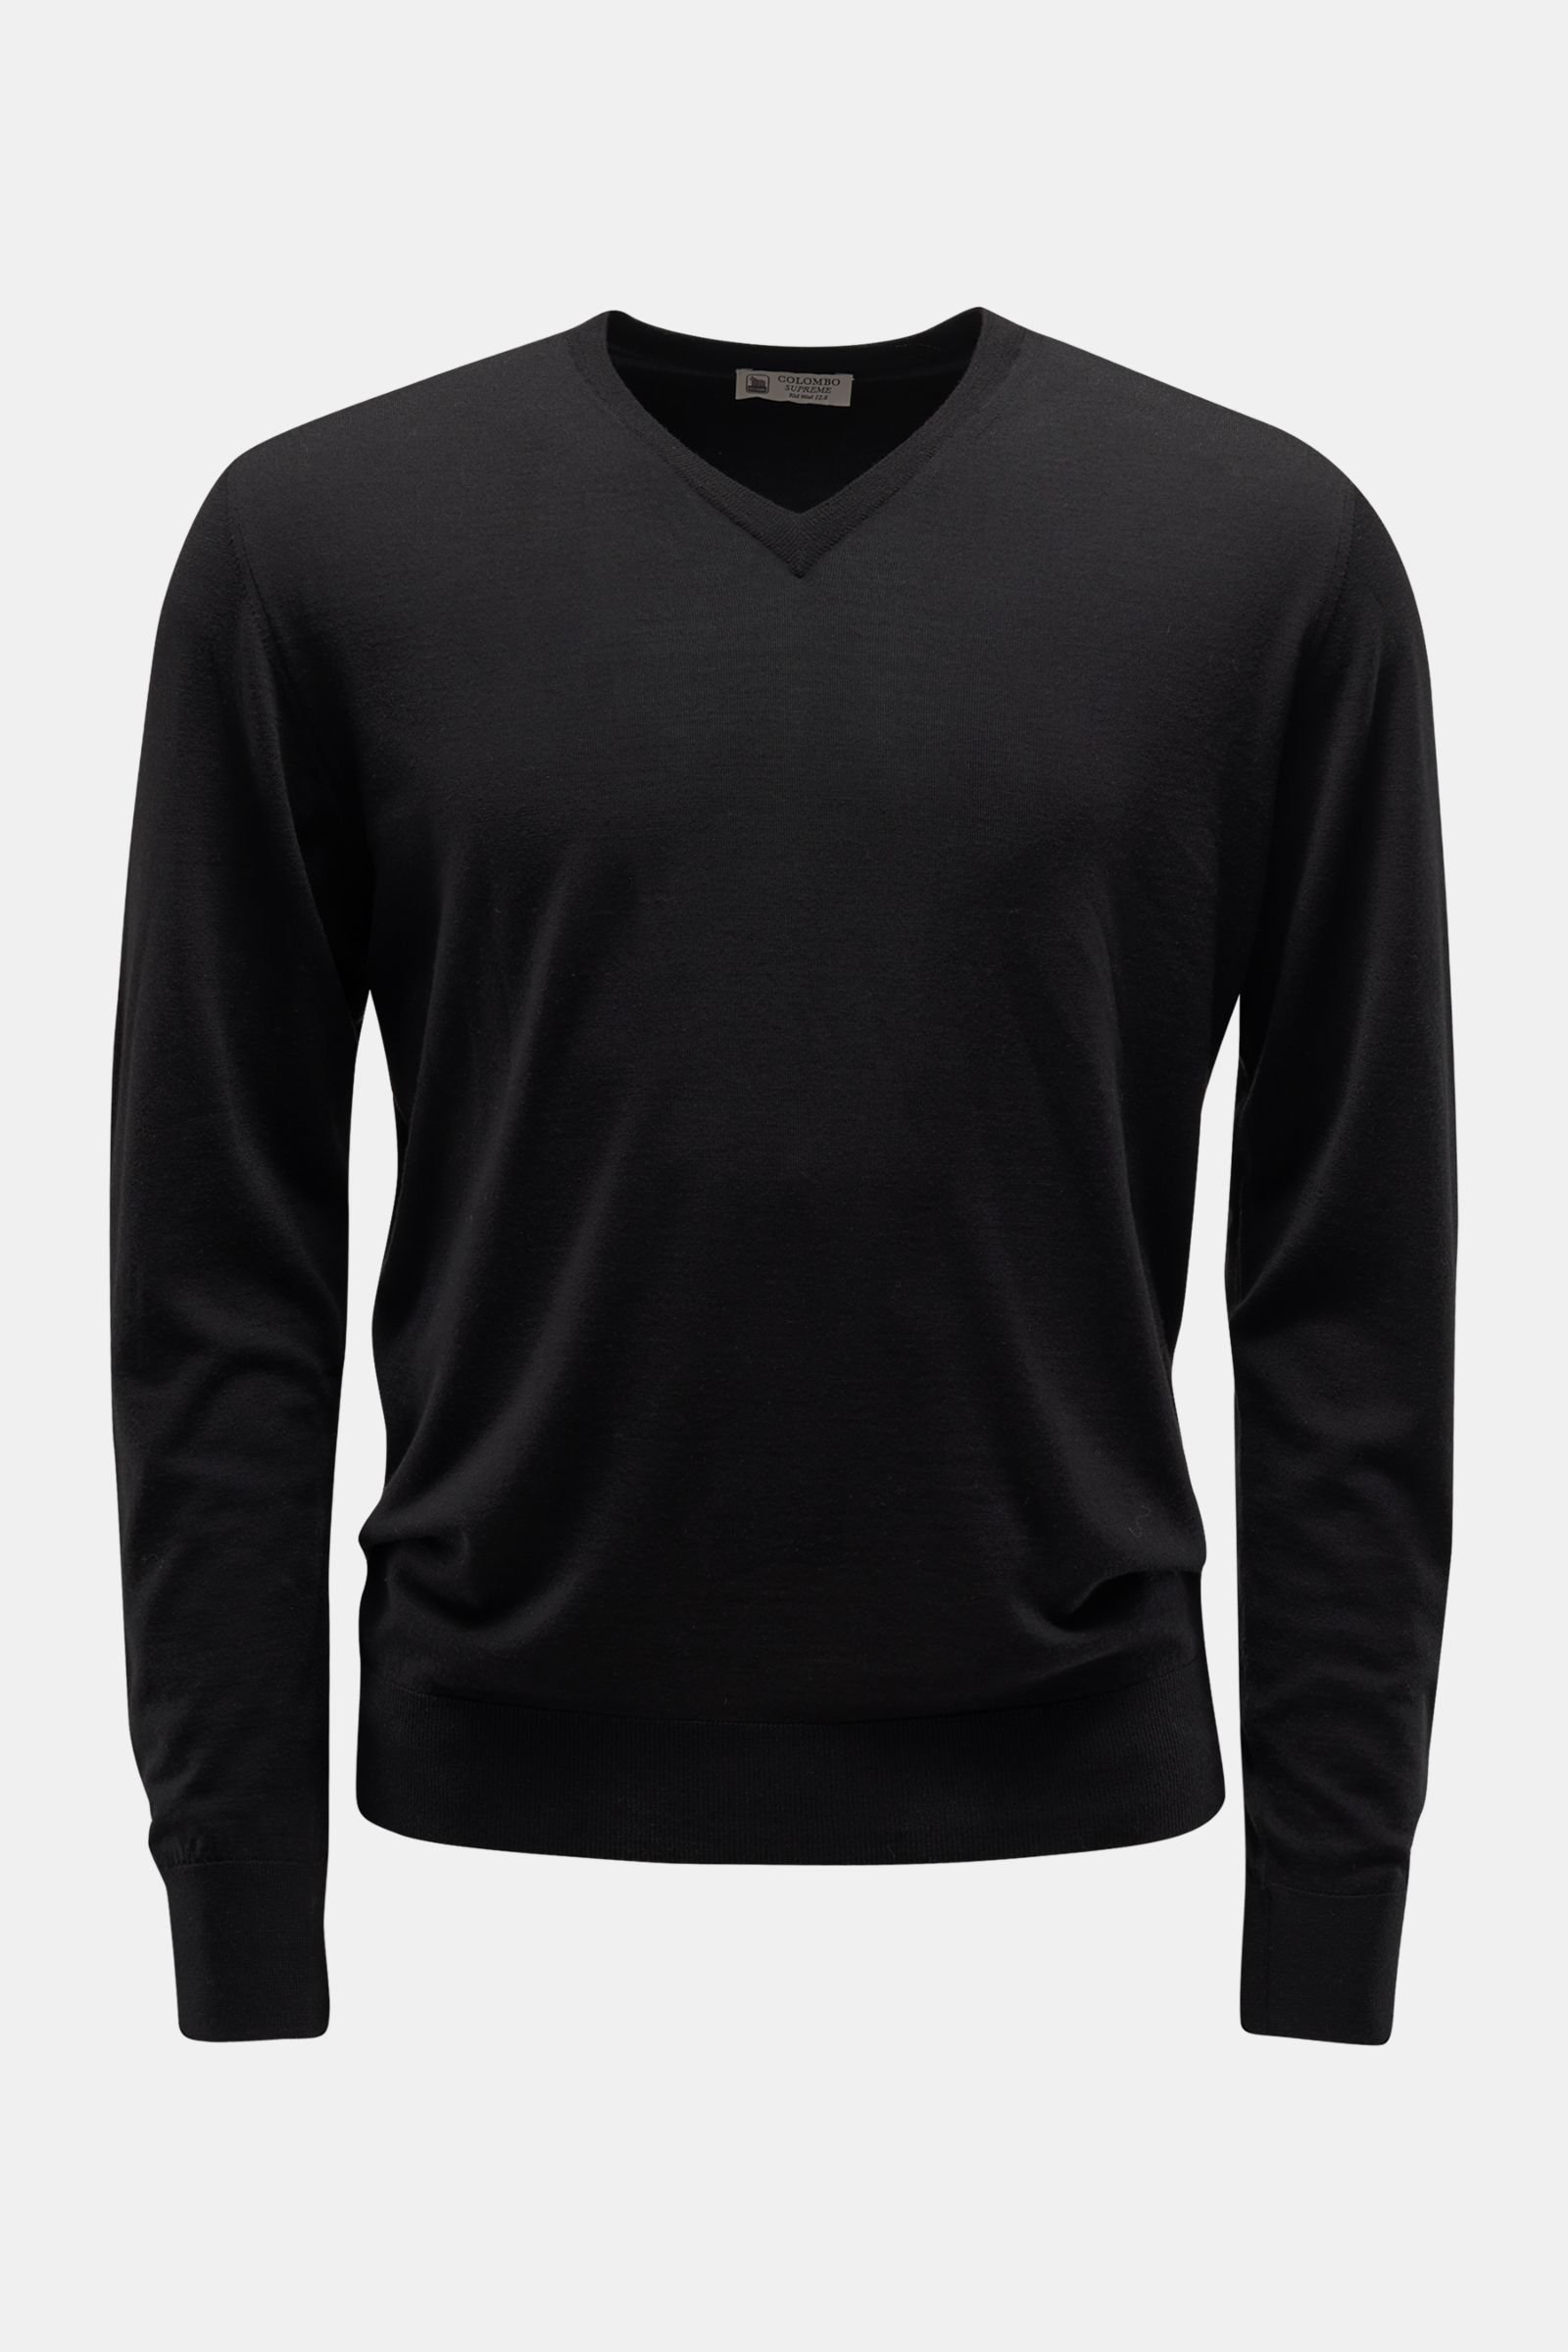 Feinstrick V-Neck Pullover schwarz